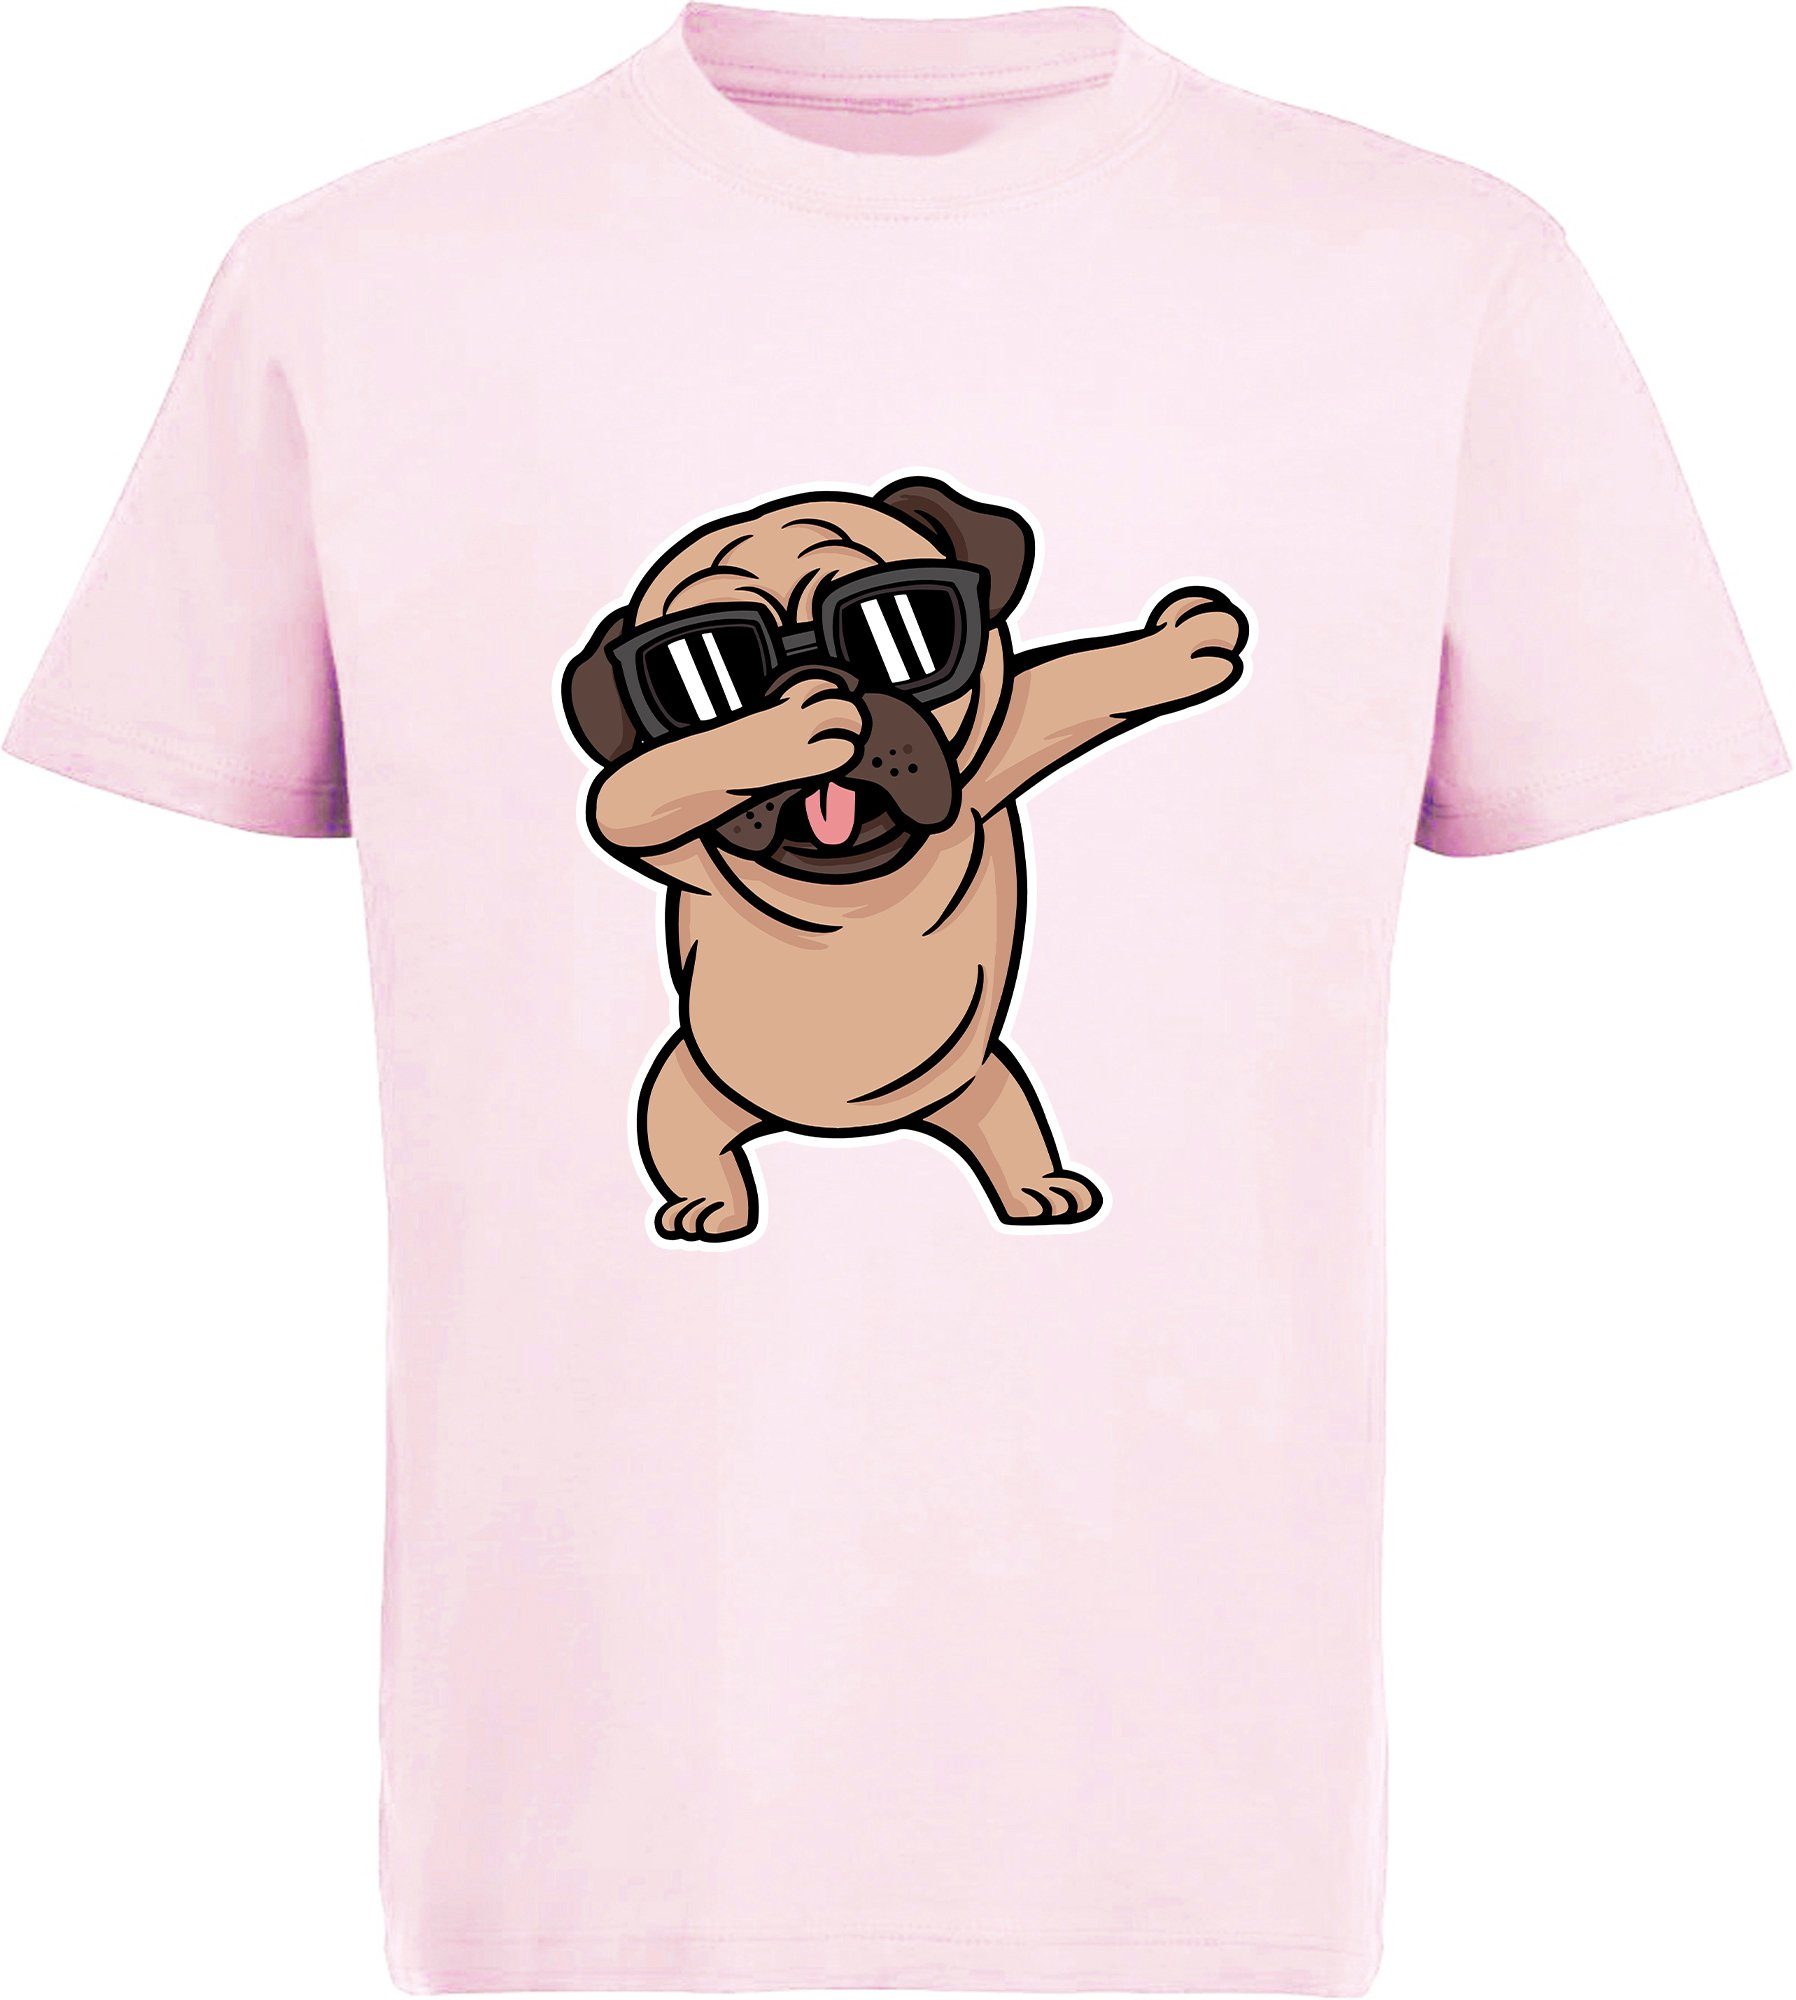 MyDesign24 T-Shirt tanzender Baumwollshirt - Kinder Hunde dab Hund bedruckt i238 rosa Aufdruck, Print-Shirt mit